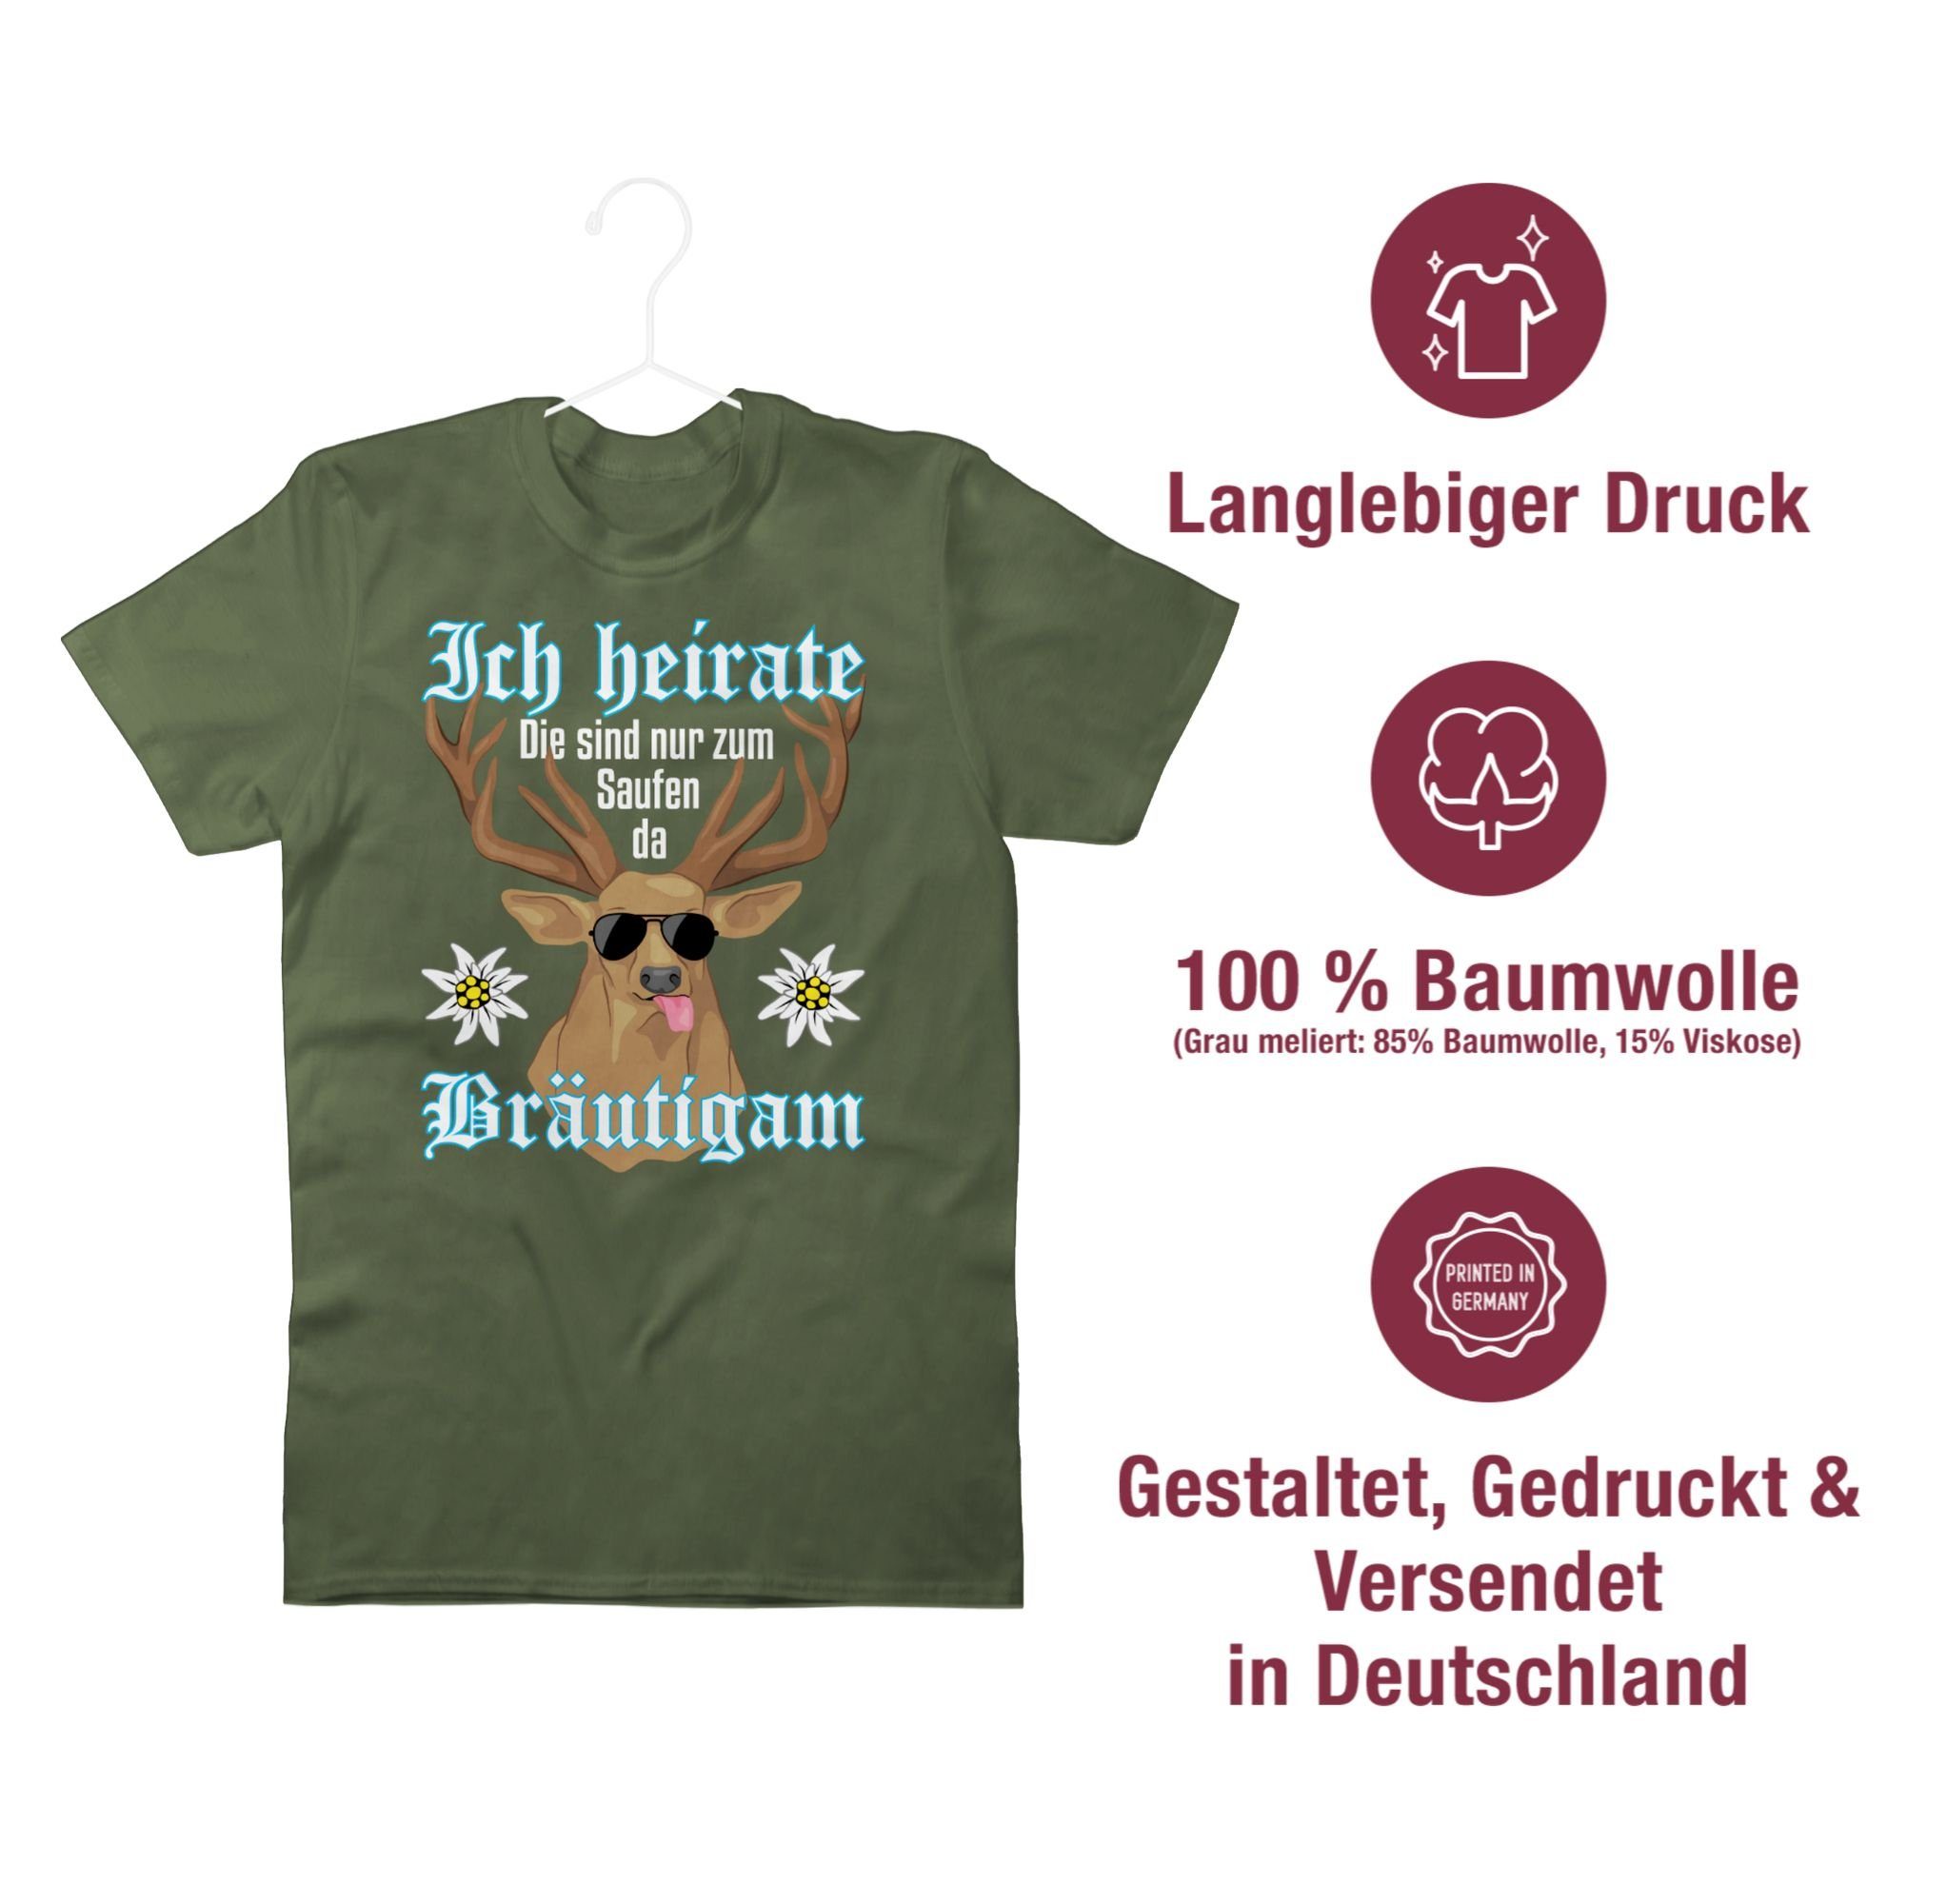 T-Shirt weiß 03 - Hirsch Männer Bräutigam Army Shirtracer JGA Grün